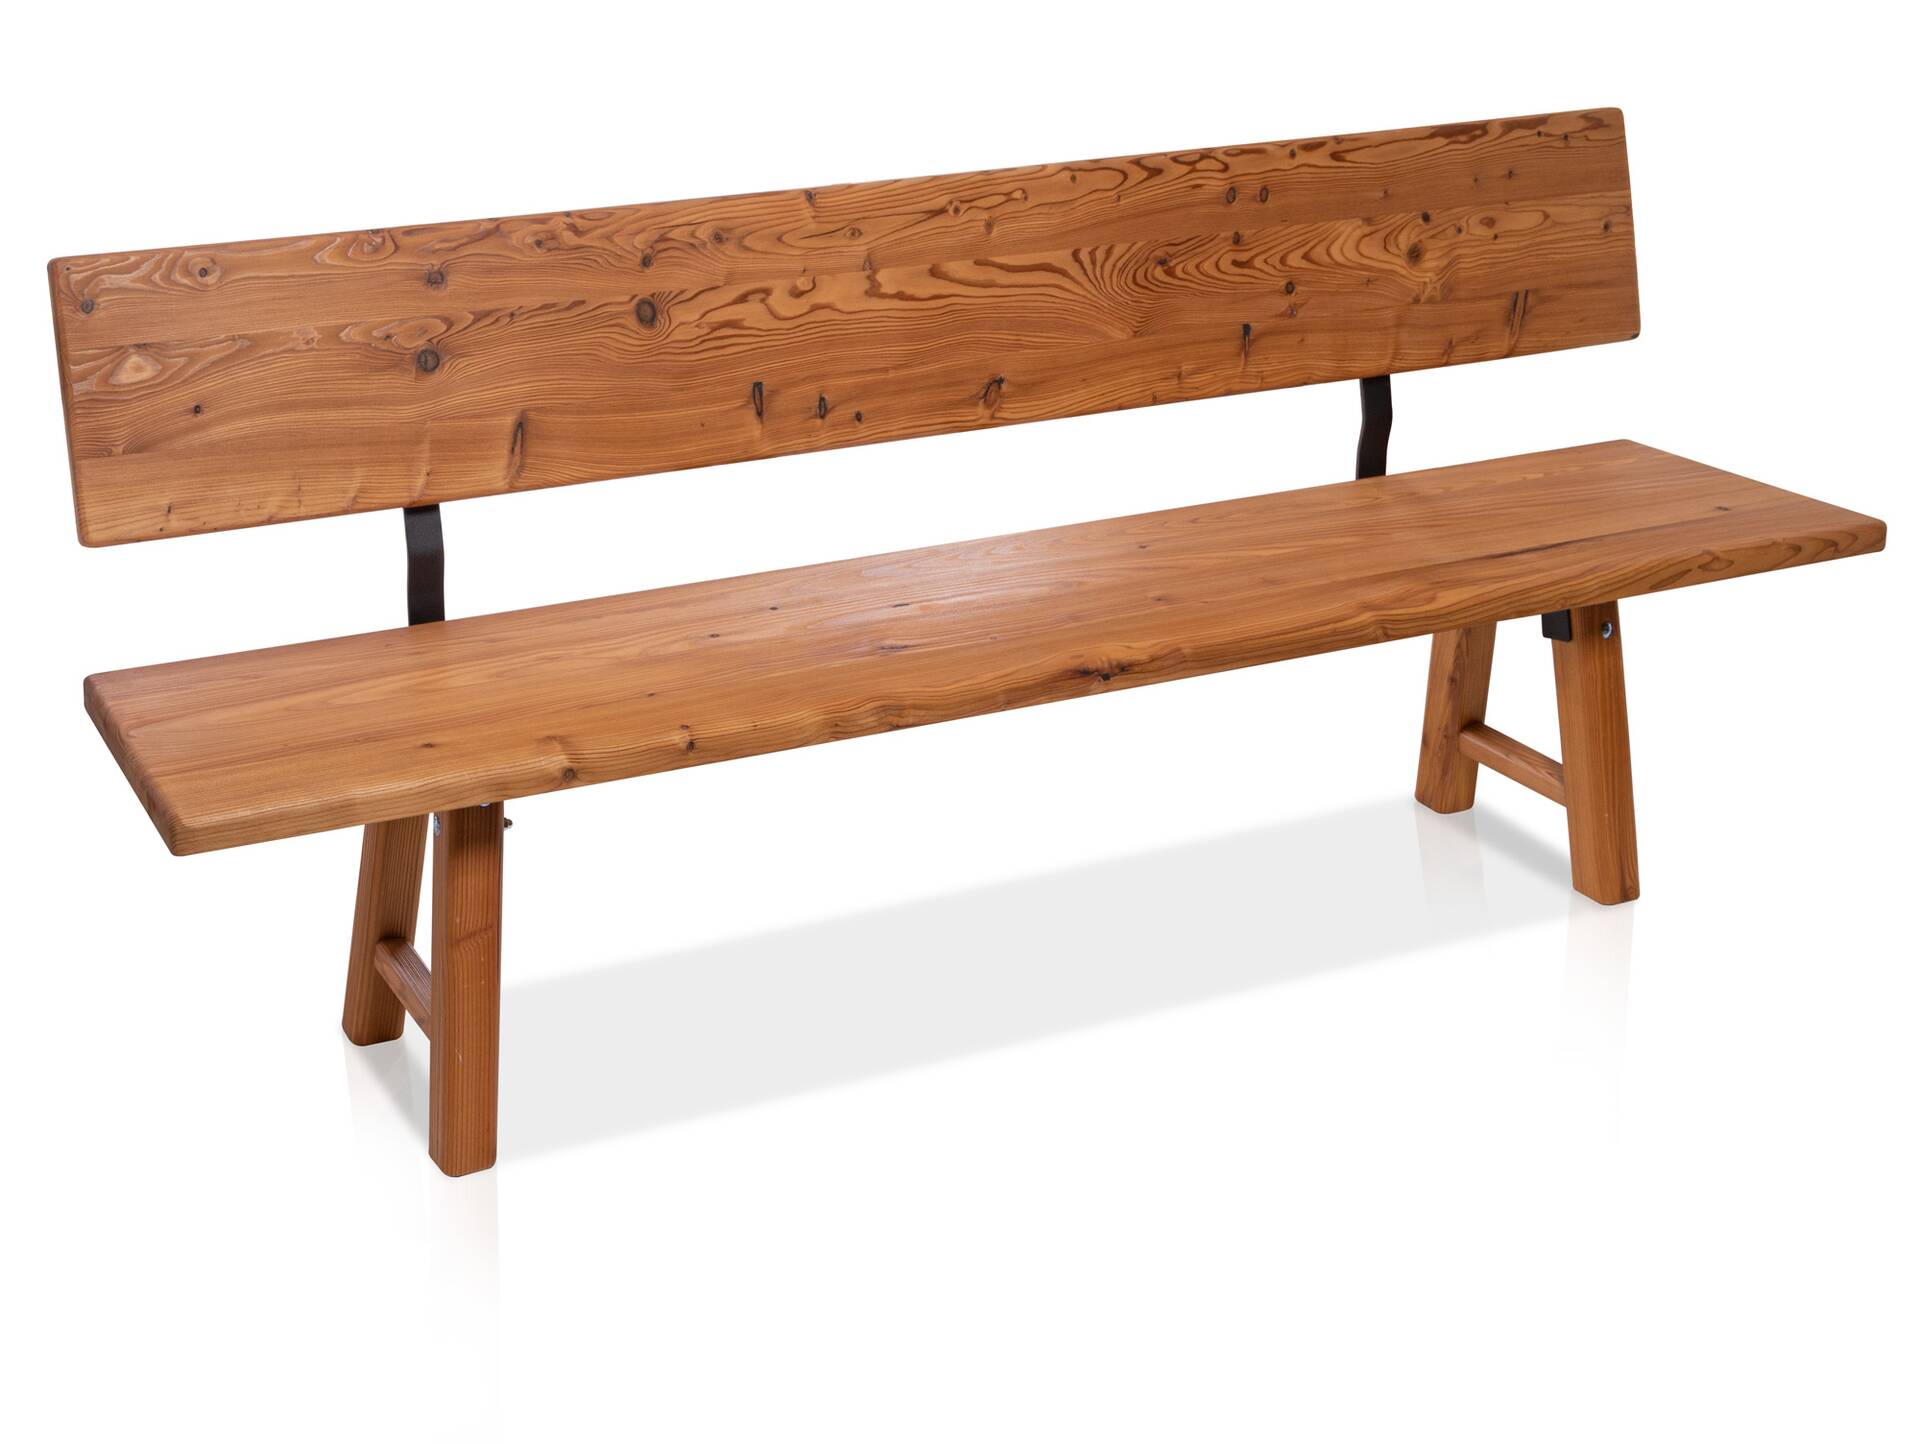 STARNBERG Sitzbank mit Rücken, Material Massivholz, Lärche gedämpft 200 cm | geölt